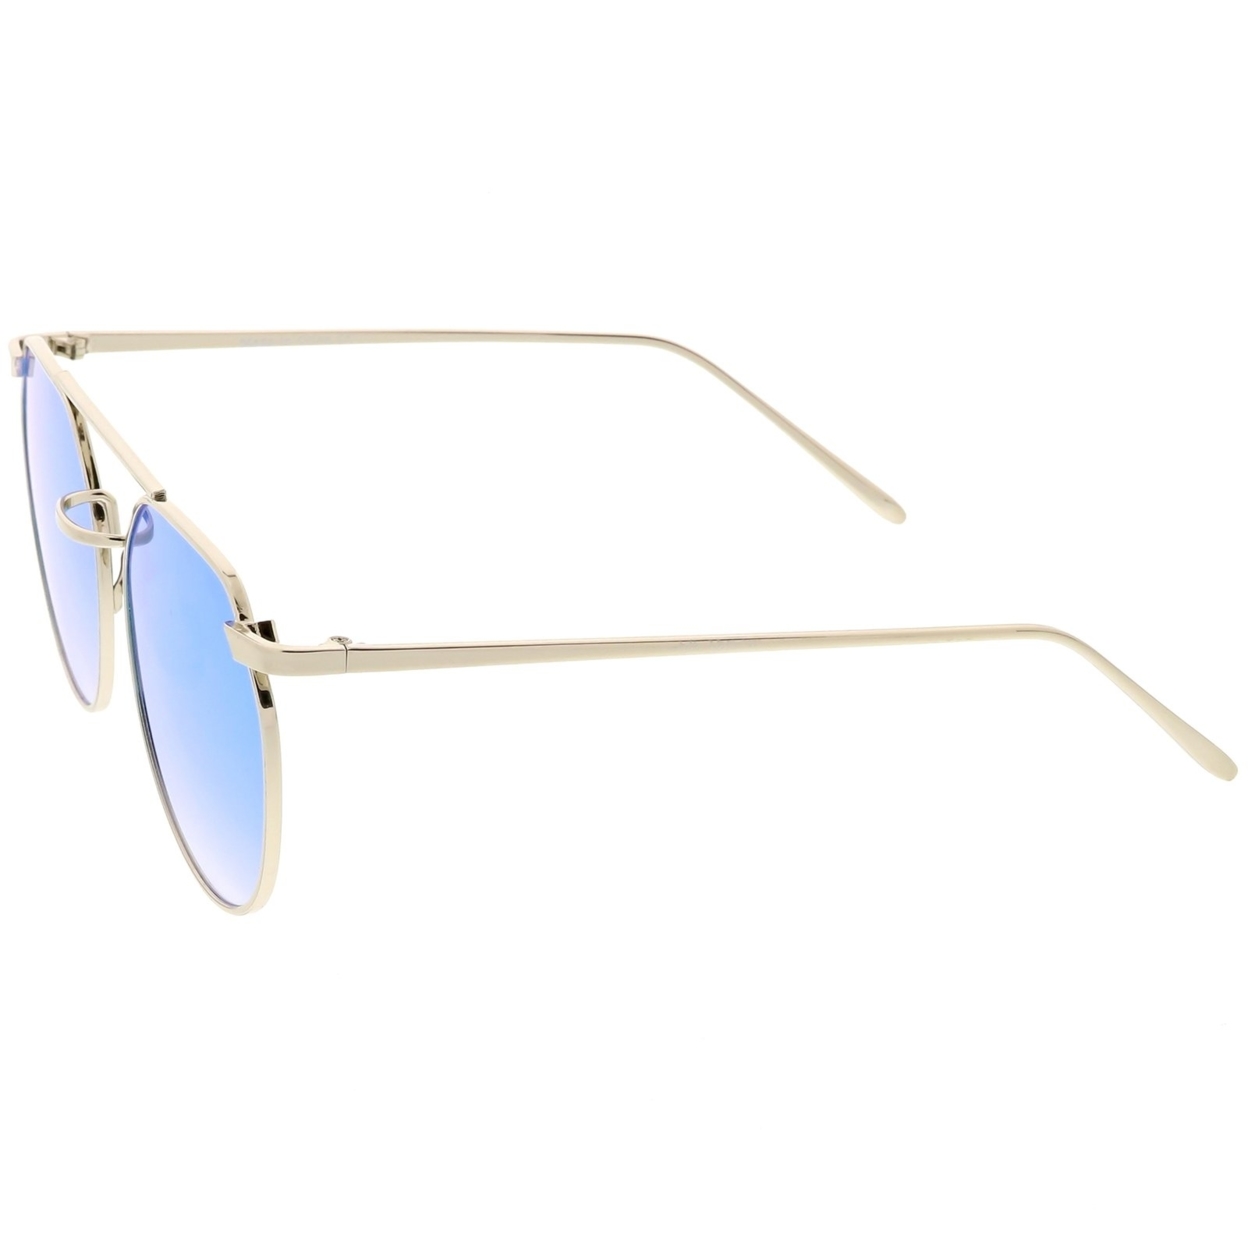 Premium Aviator Sunglasses Double Nose Bridge Colored Mirror Round Flat Lens 53mm - Gold / Gold Mirror